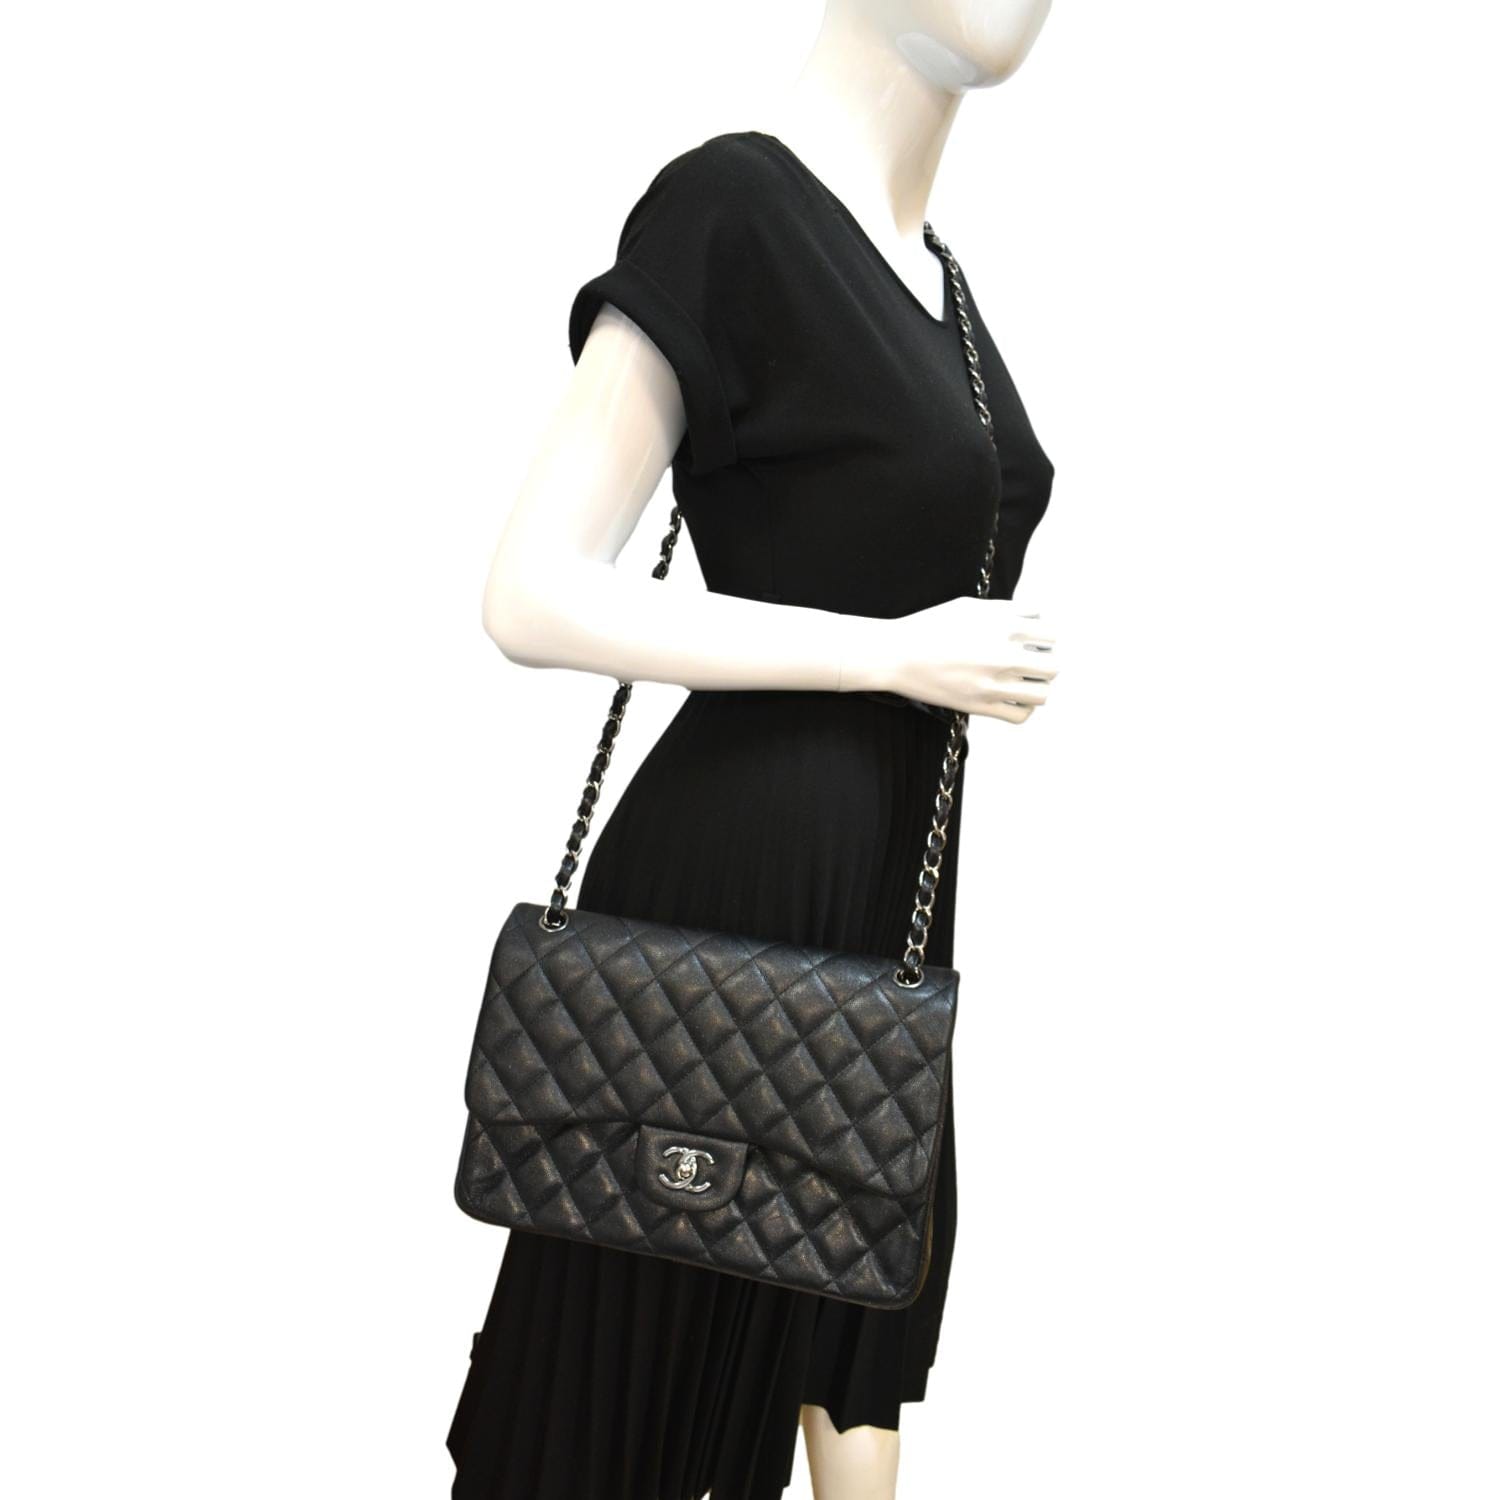 Chanel Classic Double Flap Caviar Leather Shoulder Bag